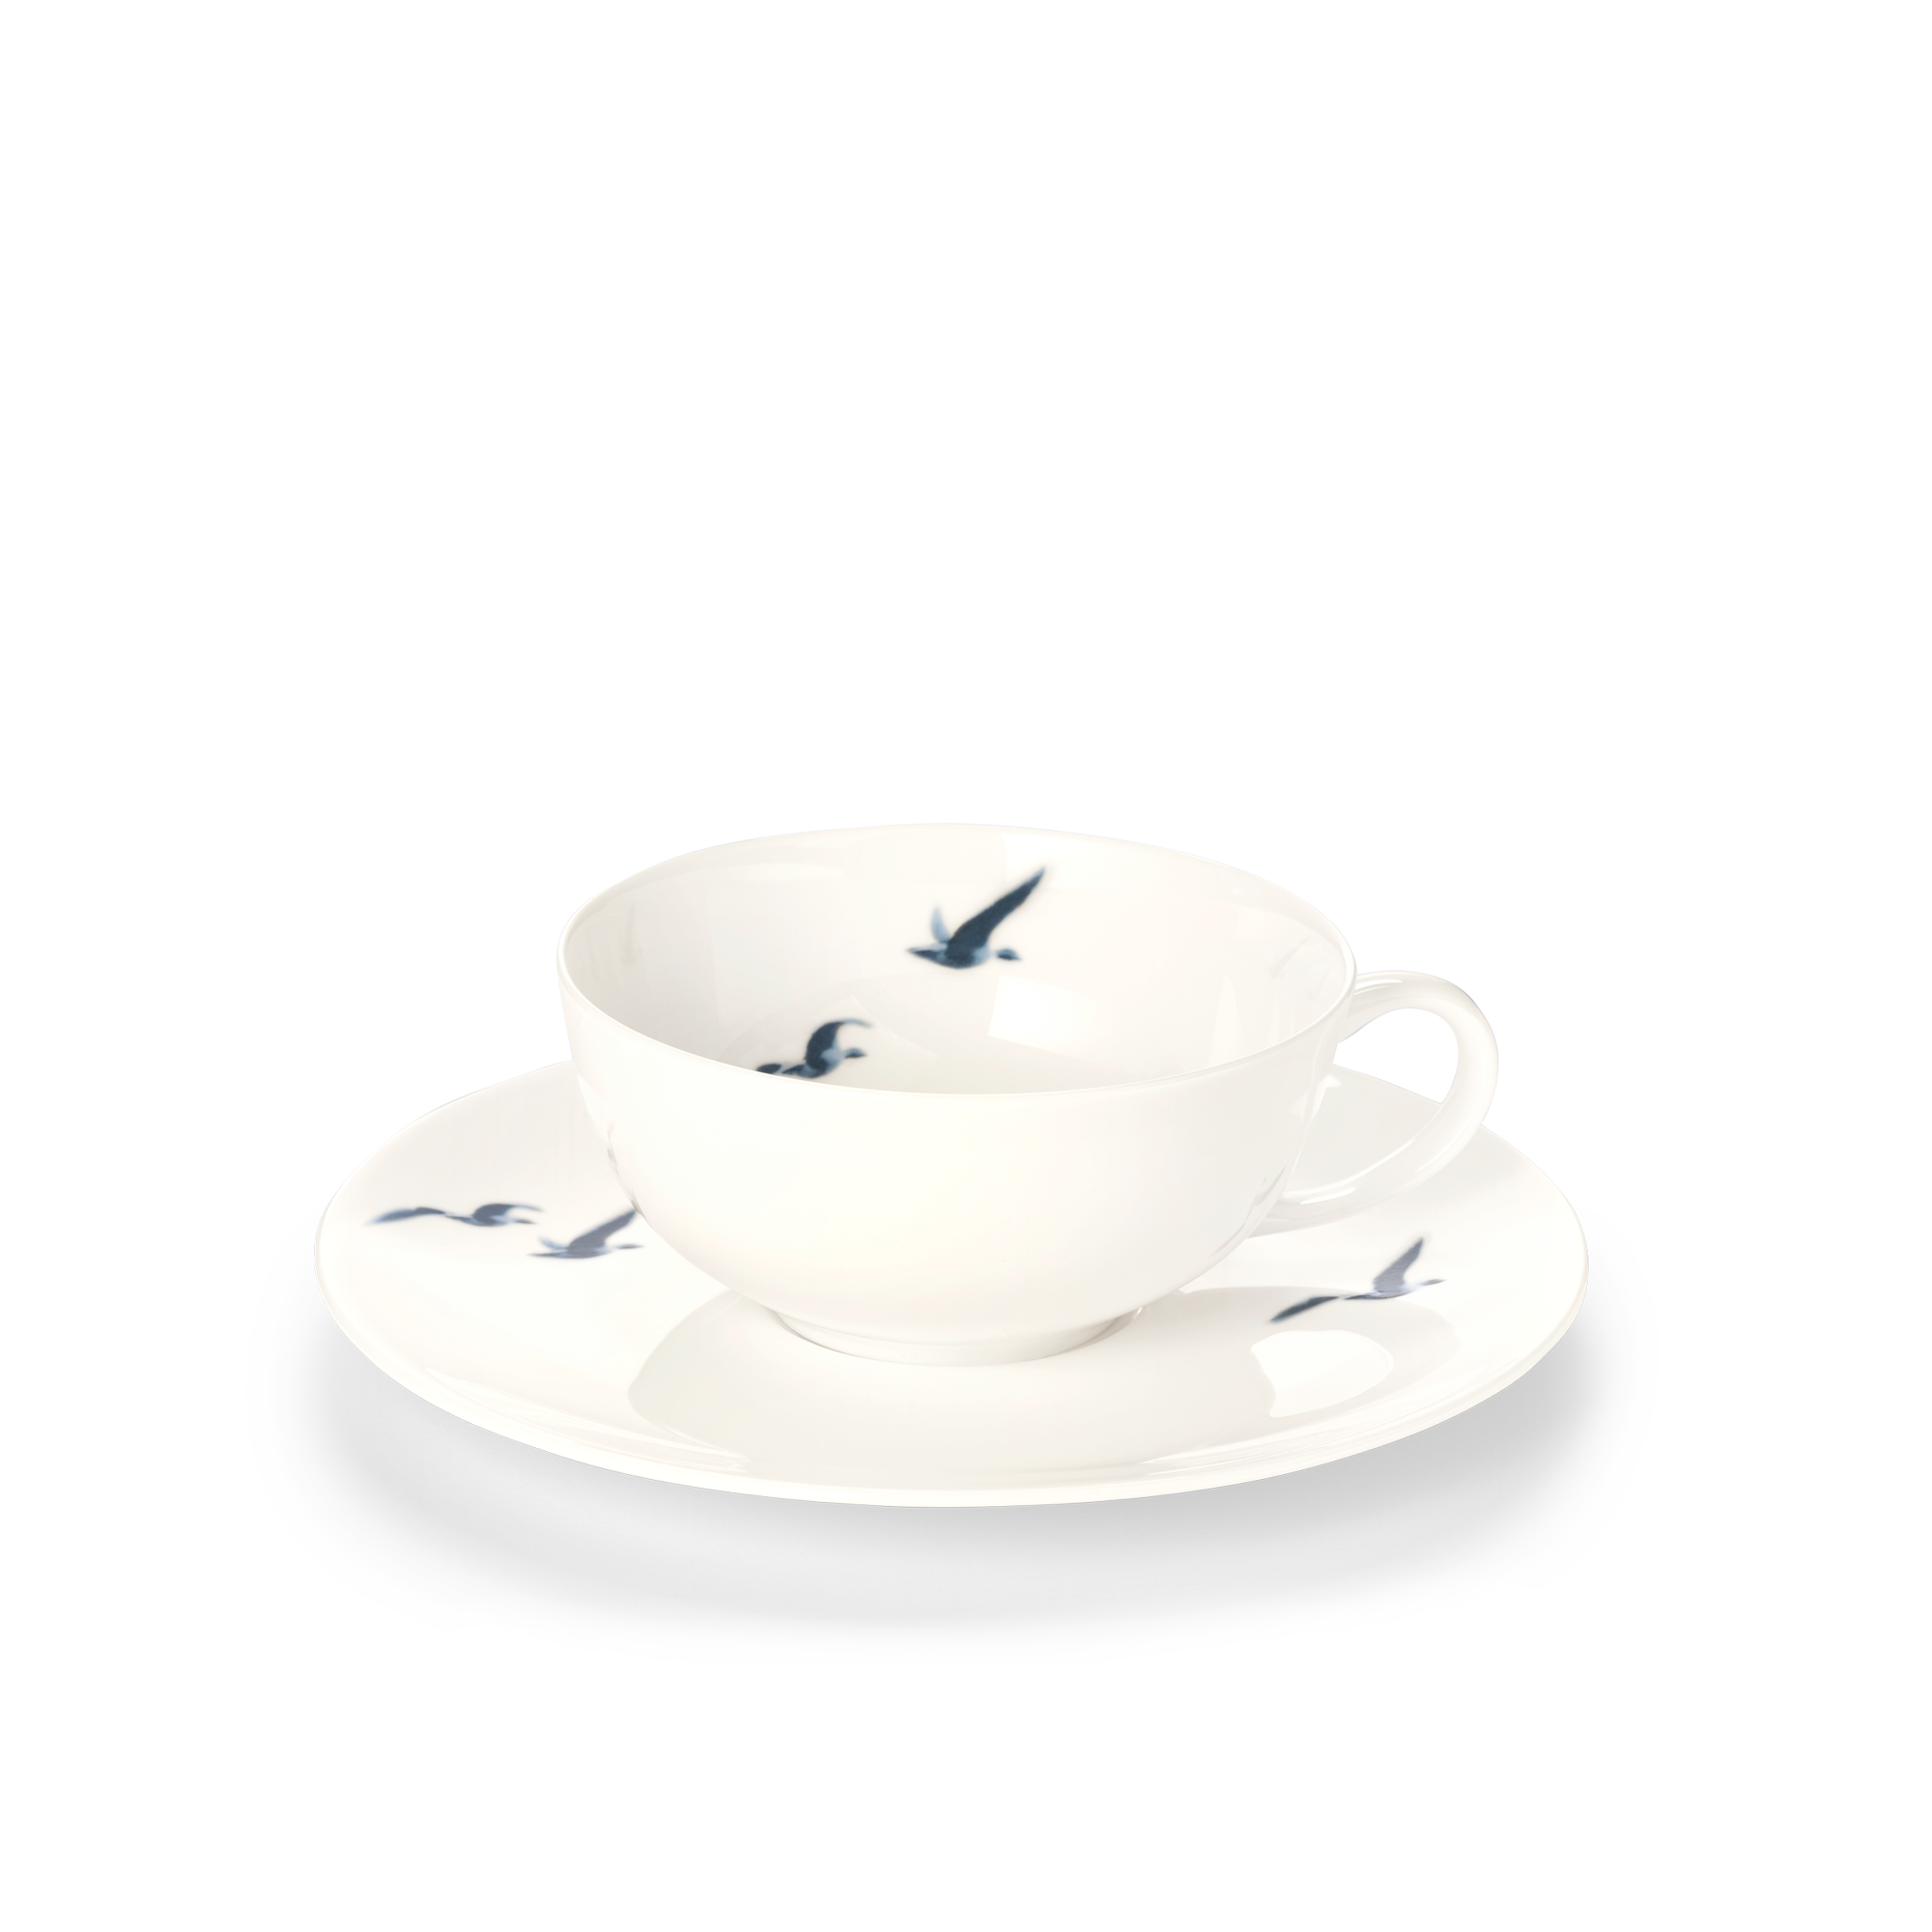 Blue Birds teacup